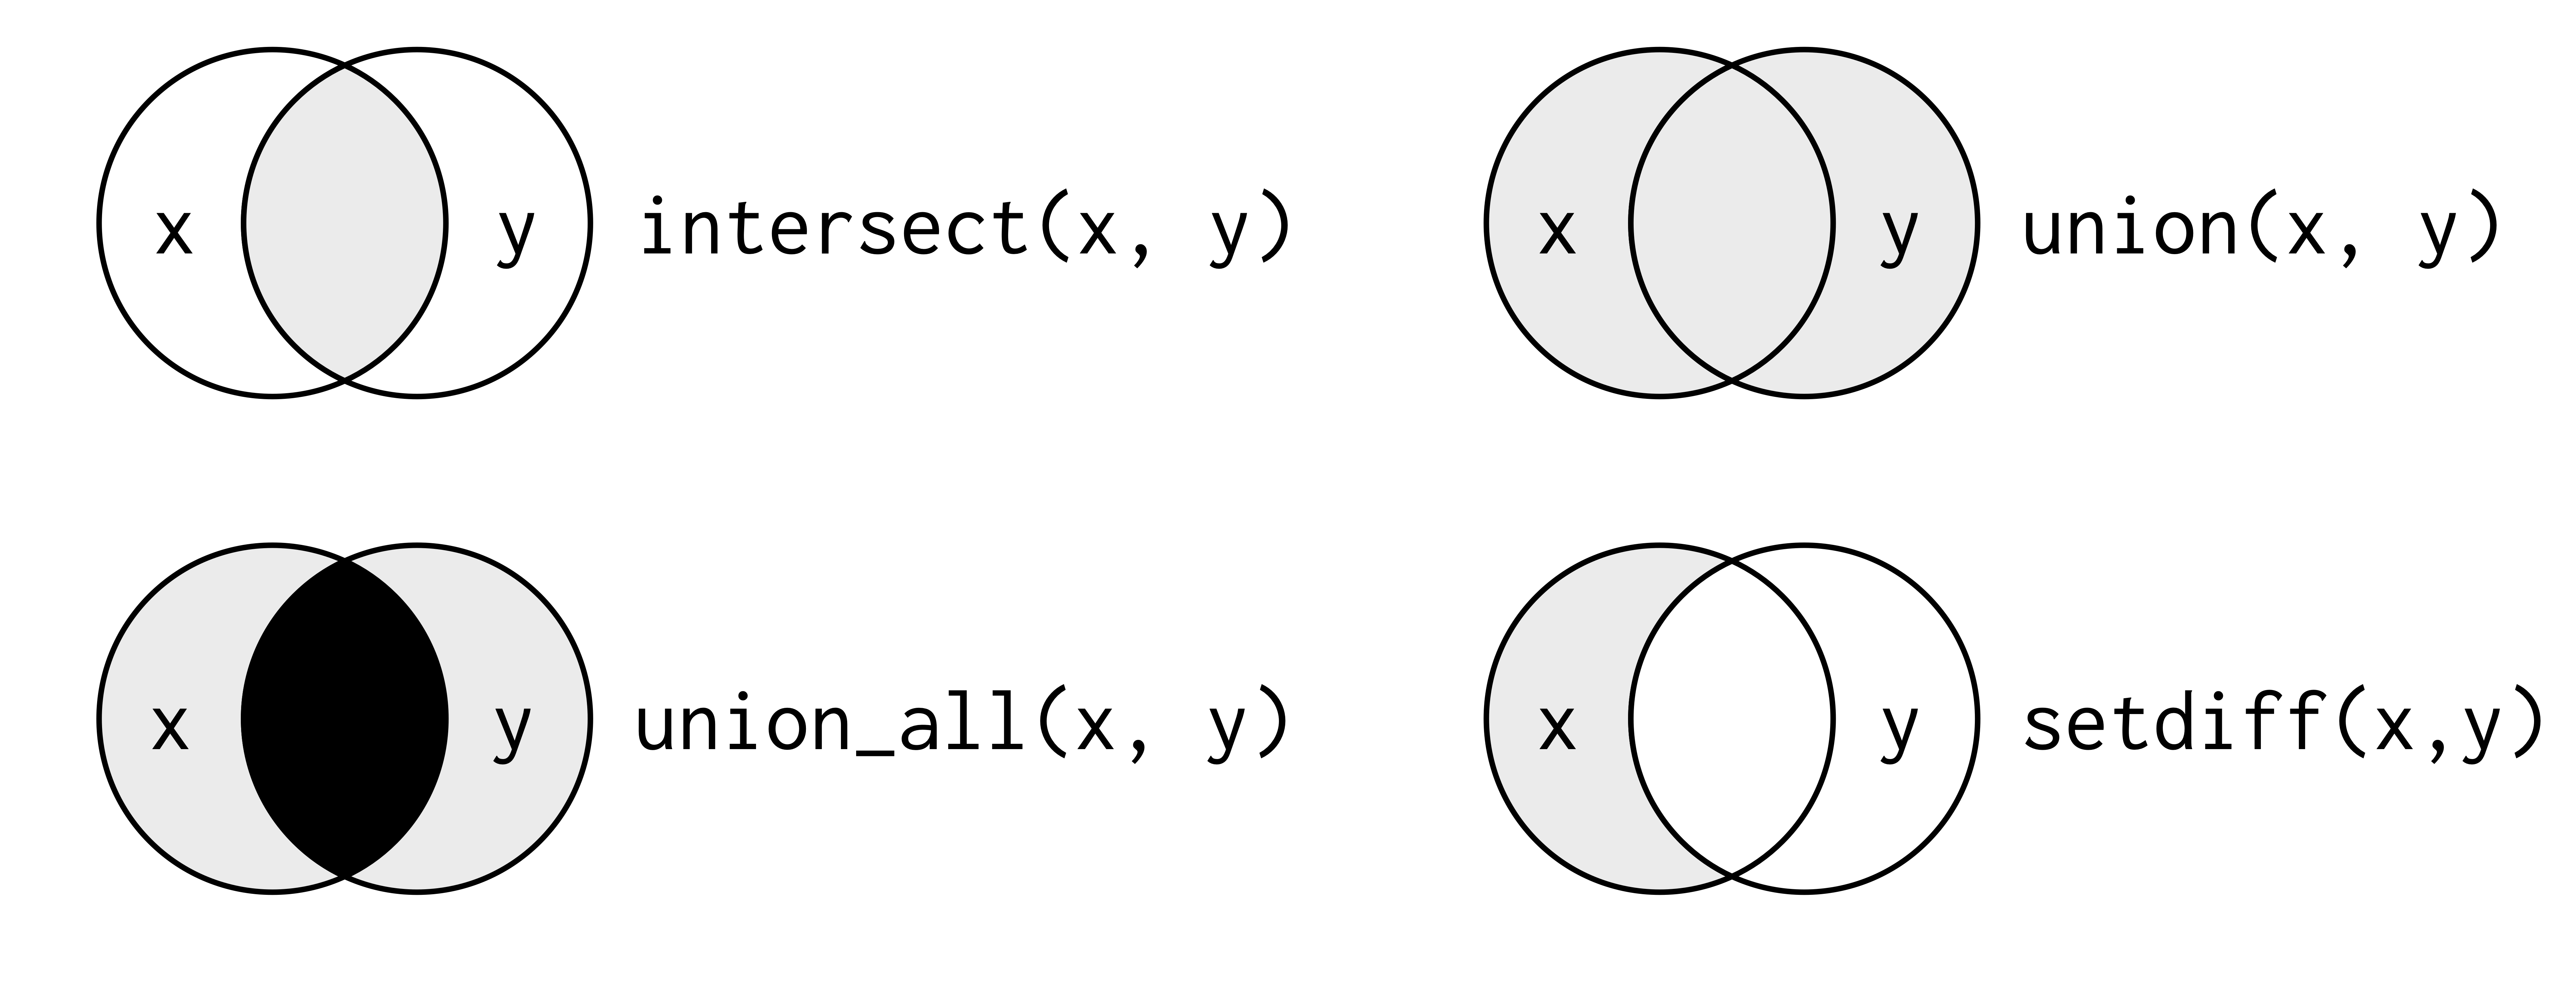 Venn Diagram of Set Operations